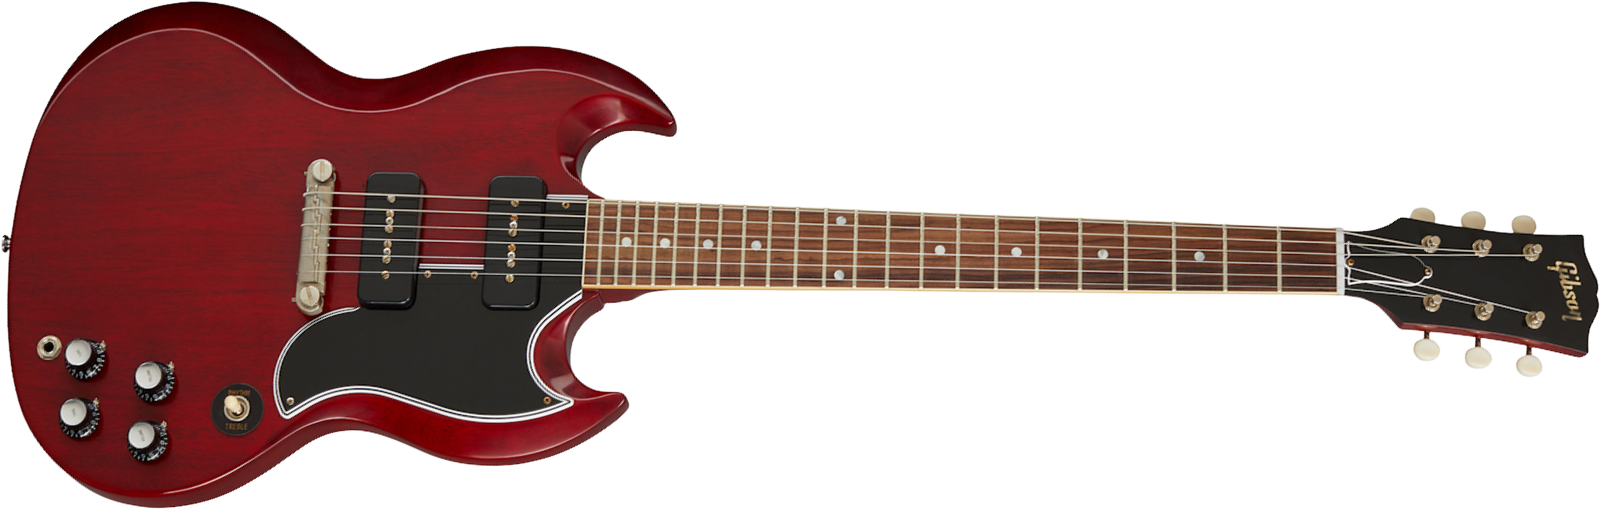 Gibson Custom Shop Sg Special 1963 Reissue 2p90 Ht Rw - Vos Cherry Red - Guitarra eléctrica de doble corte. - Main picture